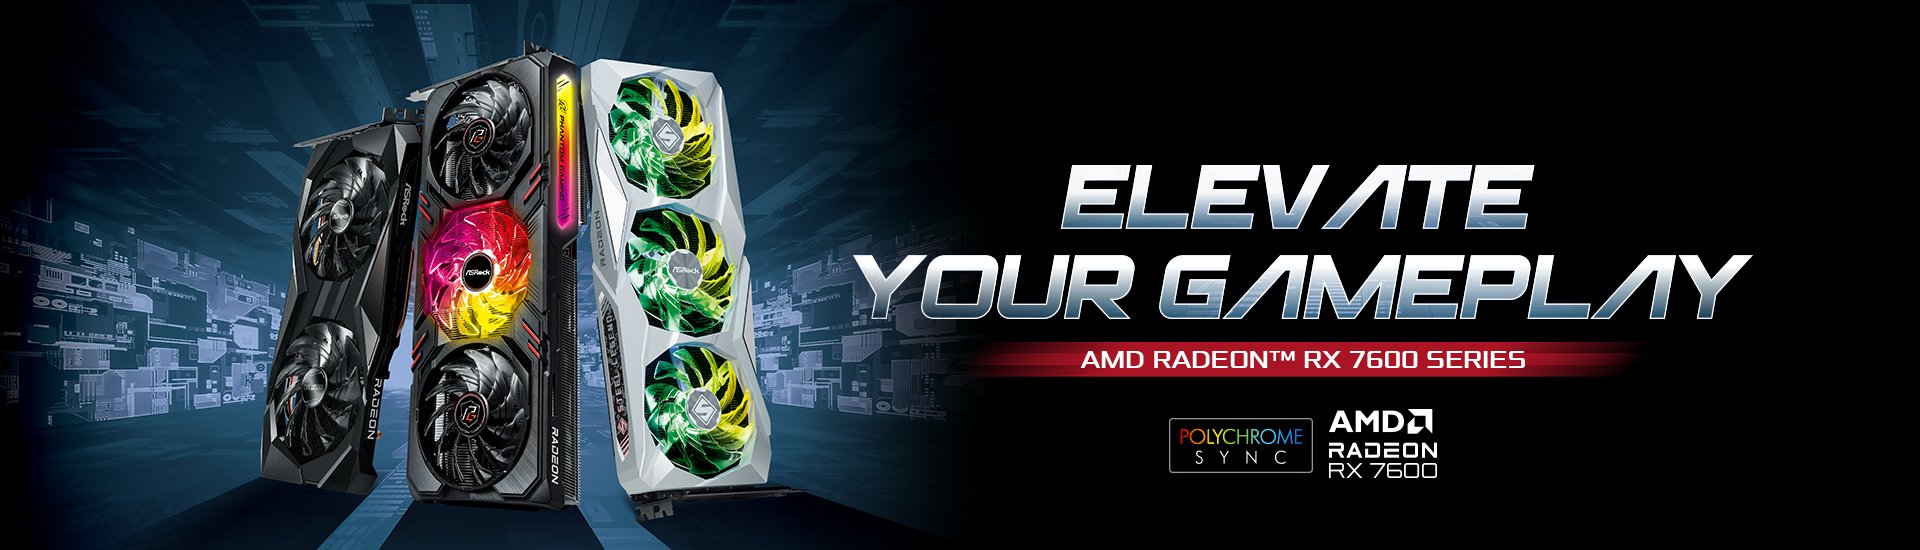 AMD Radeon RX 7600 Series